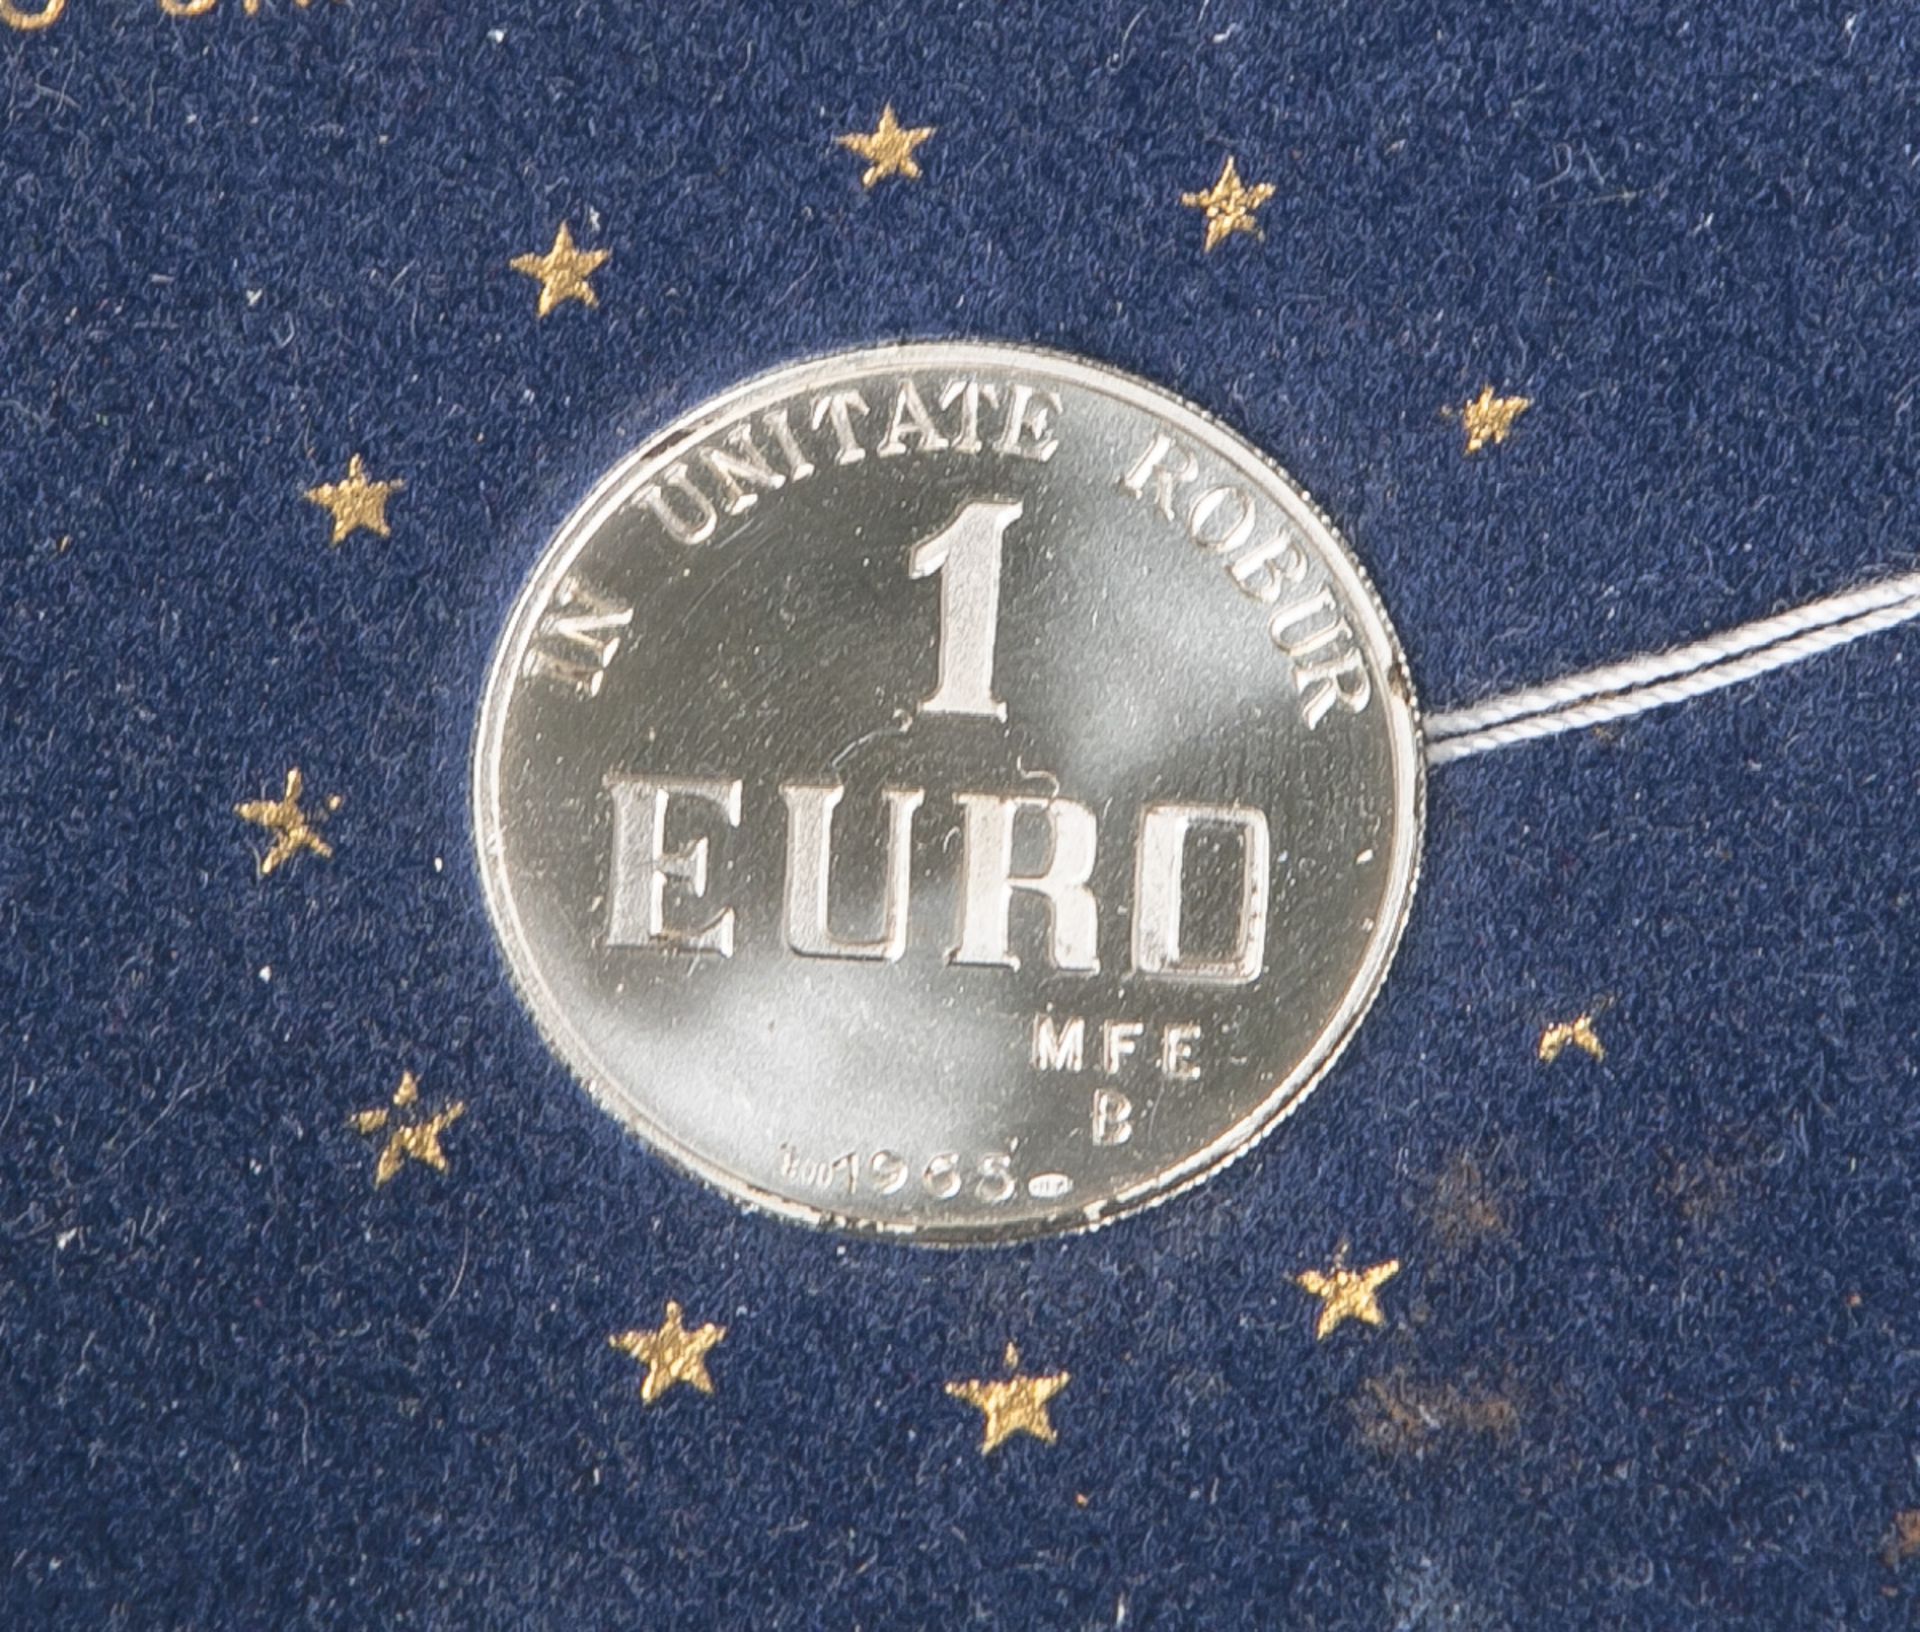 1 Euro Münze, In Unitate Robur, Silber 800/1000, Italia / Bologna 1965, MünzprägestätteMFE B, Dm.